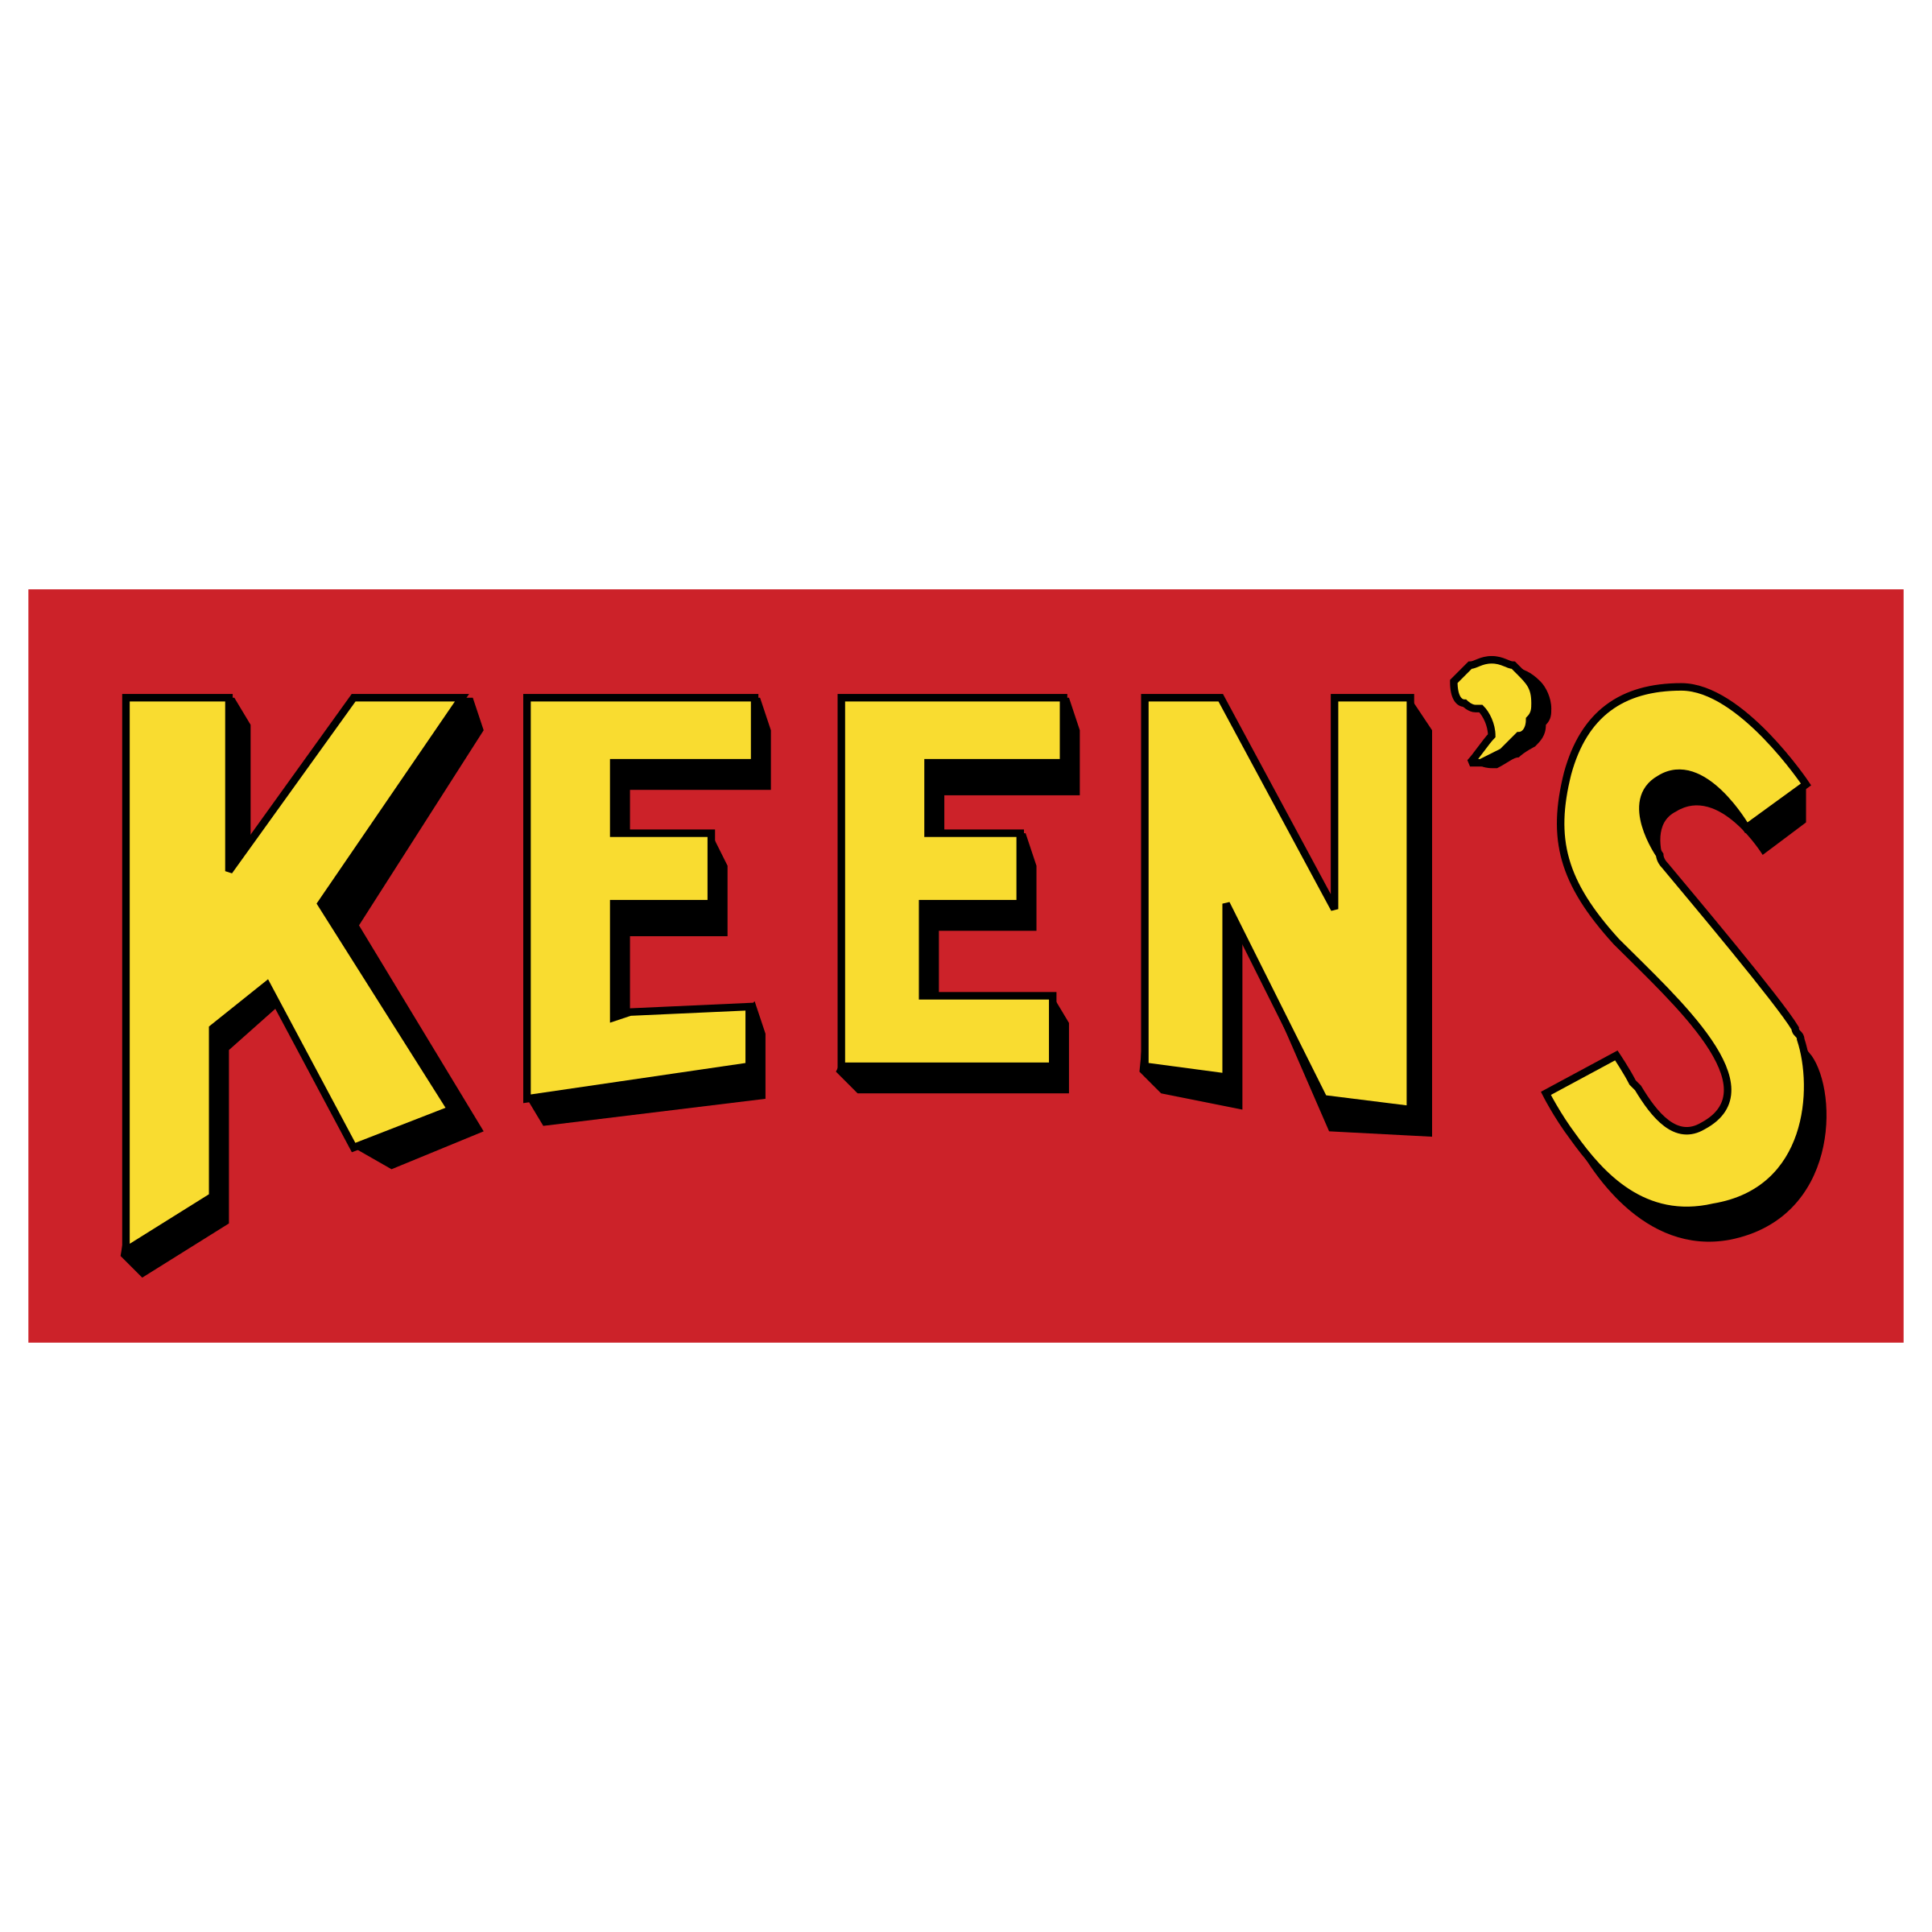 Keen.com Logo - Keen's Logo PNG Transparent & SVG Vector - Freebie Supply